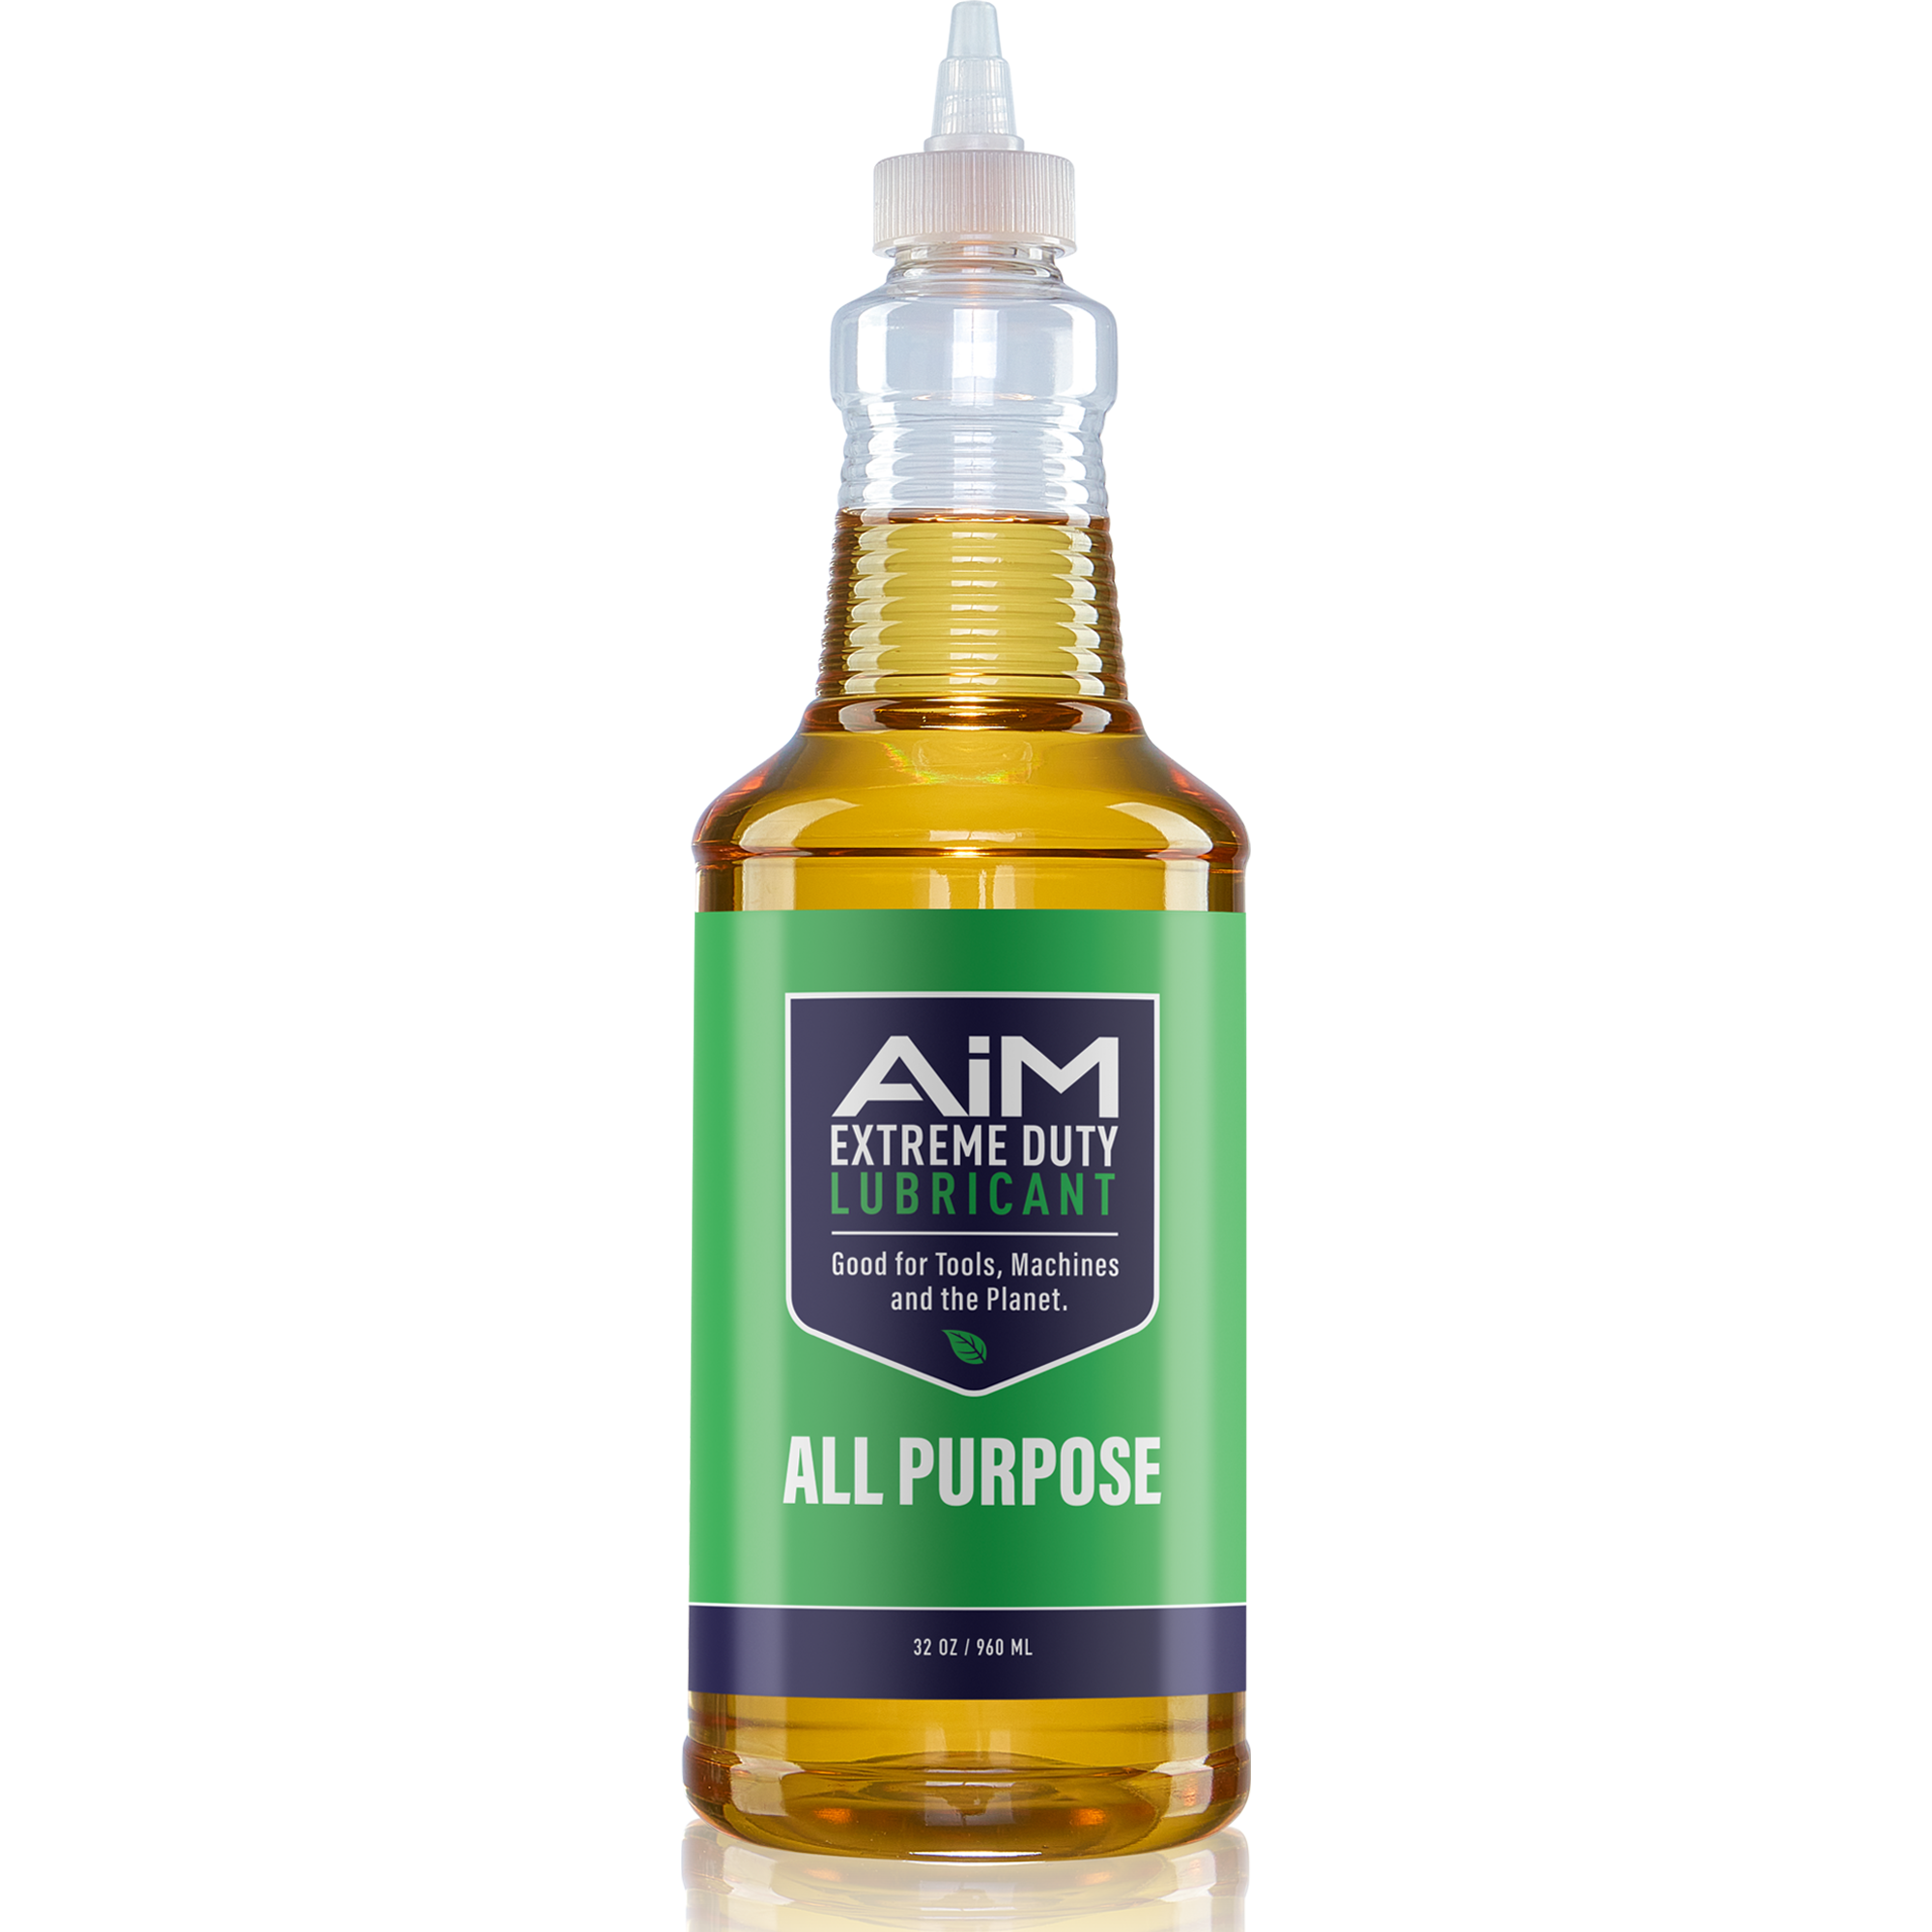 AiM Extreme Duty Lubricant | All Purpose | 32oz yorker/sprayer